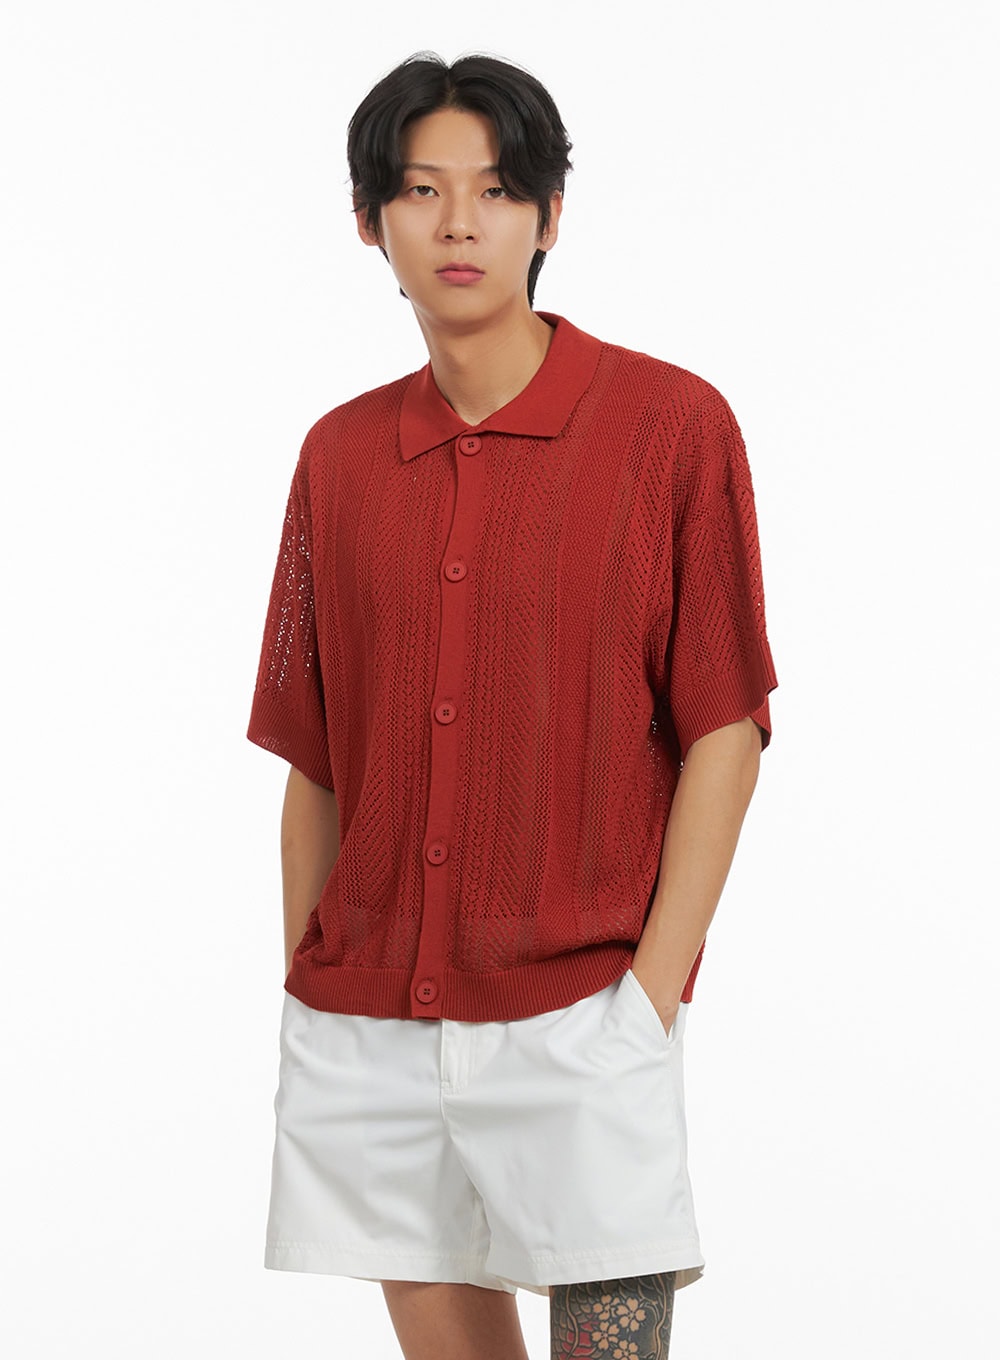 mens-short-sleeve-summer-knit-button-up-top-iy416 / Orange